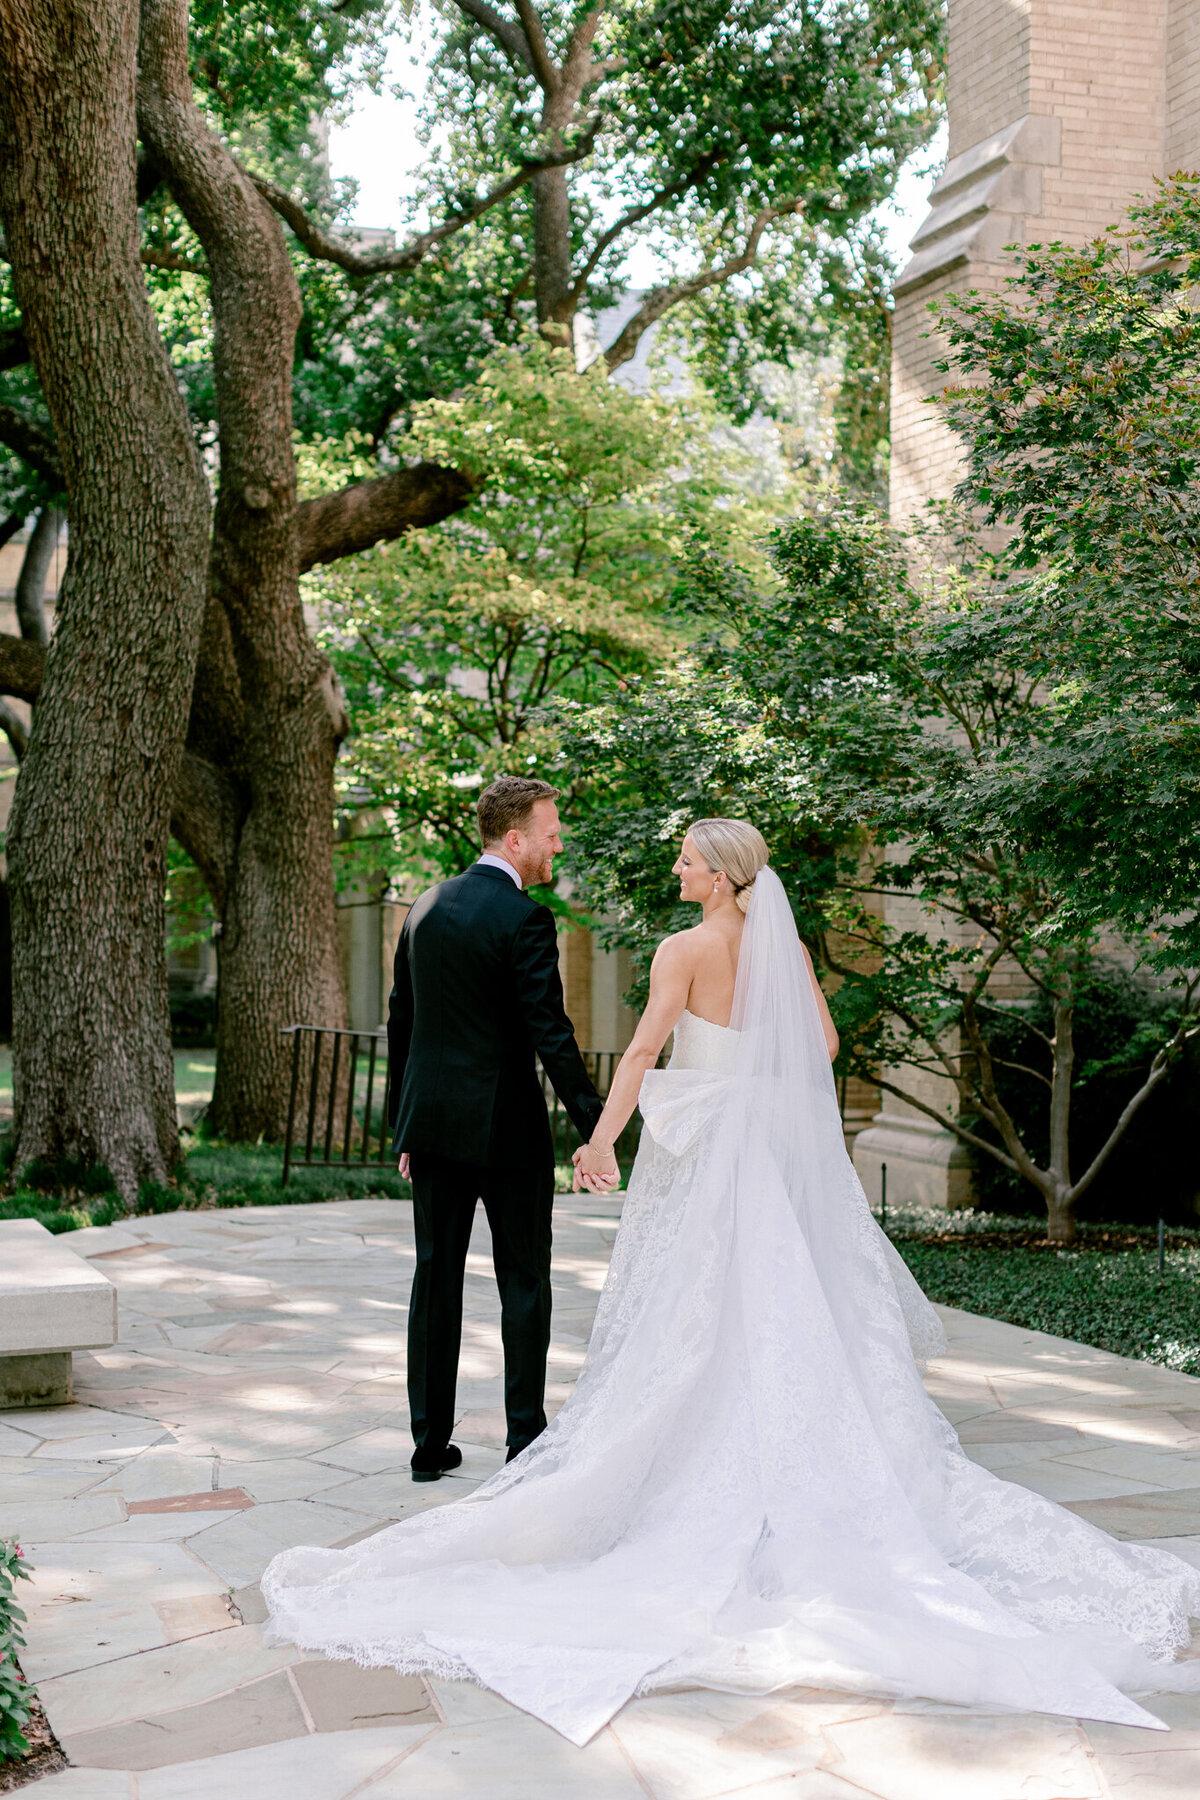 Katelyn & Kyle's Wedding at the Adolphus Hotel | Dallas Wedding Photographer | Sami Kathryn Photography-211